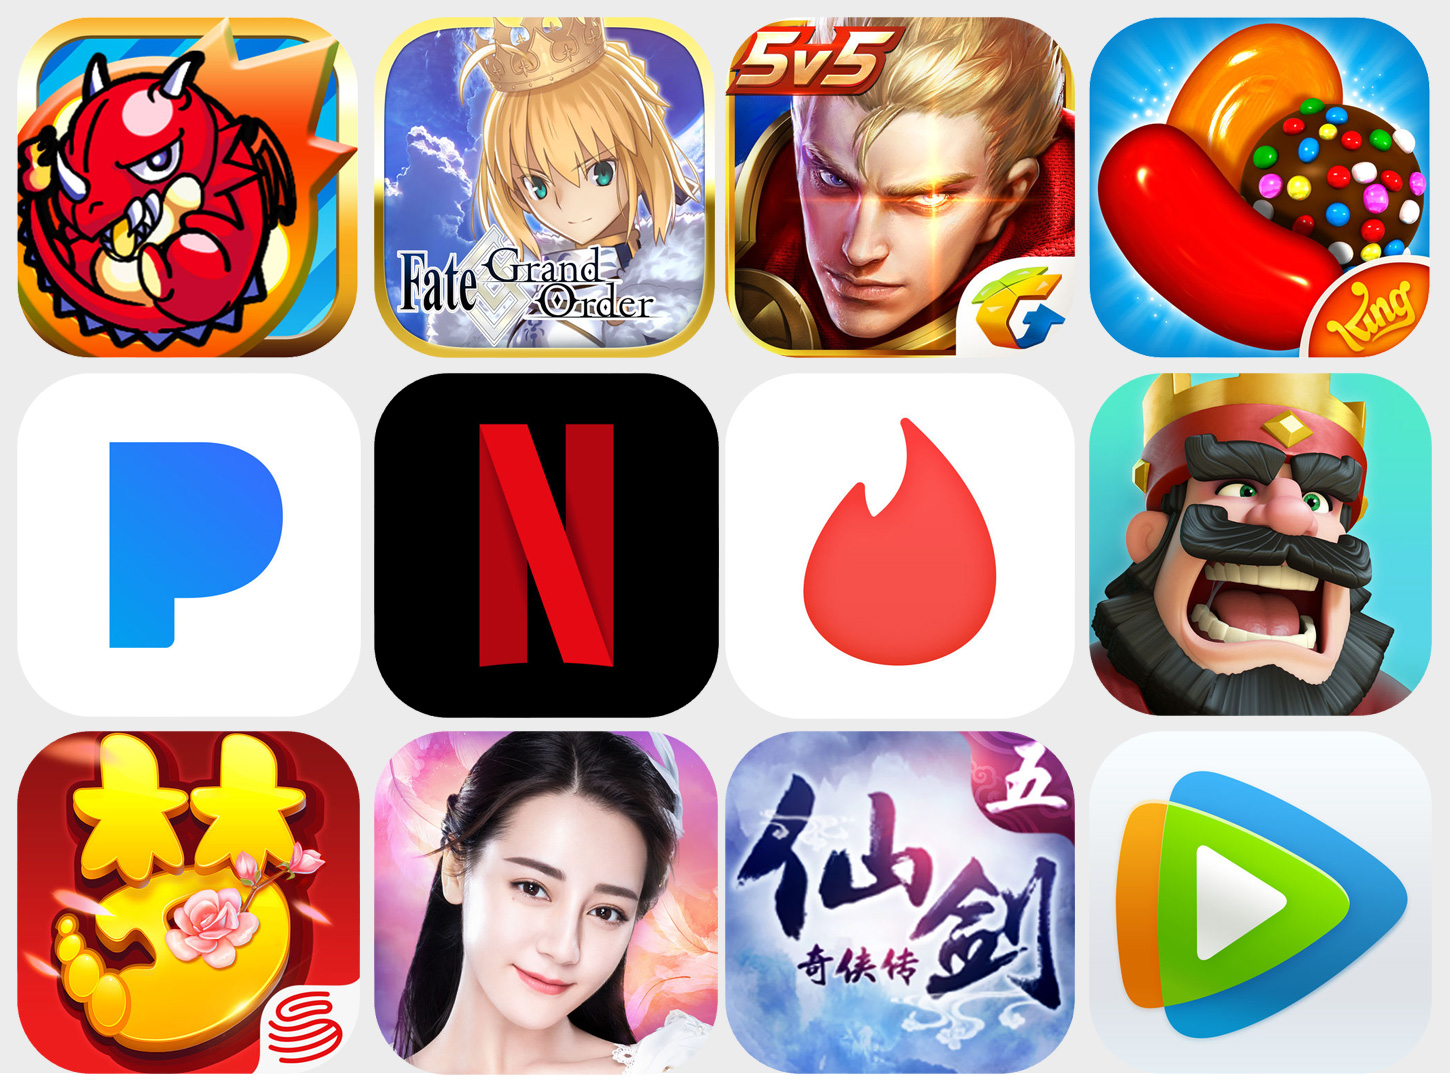 Top apps for September 2017 hero image